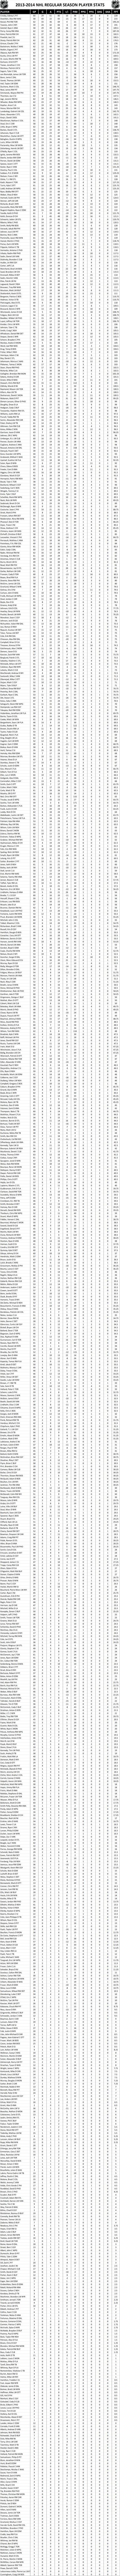 2013-2014 National Hockey League Pool Season Player Stats